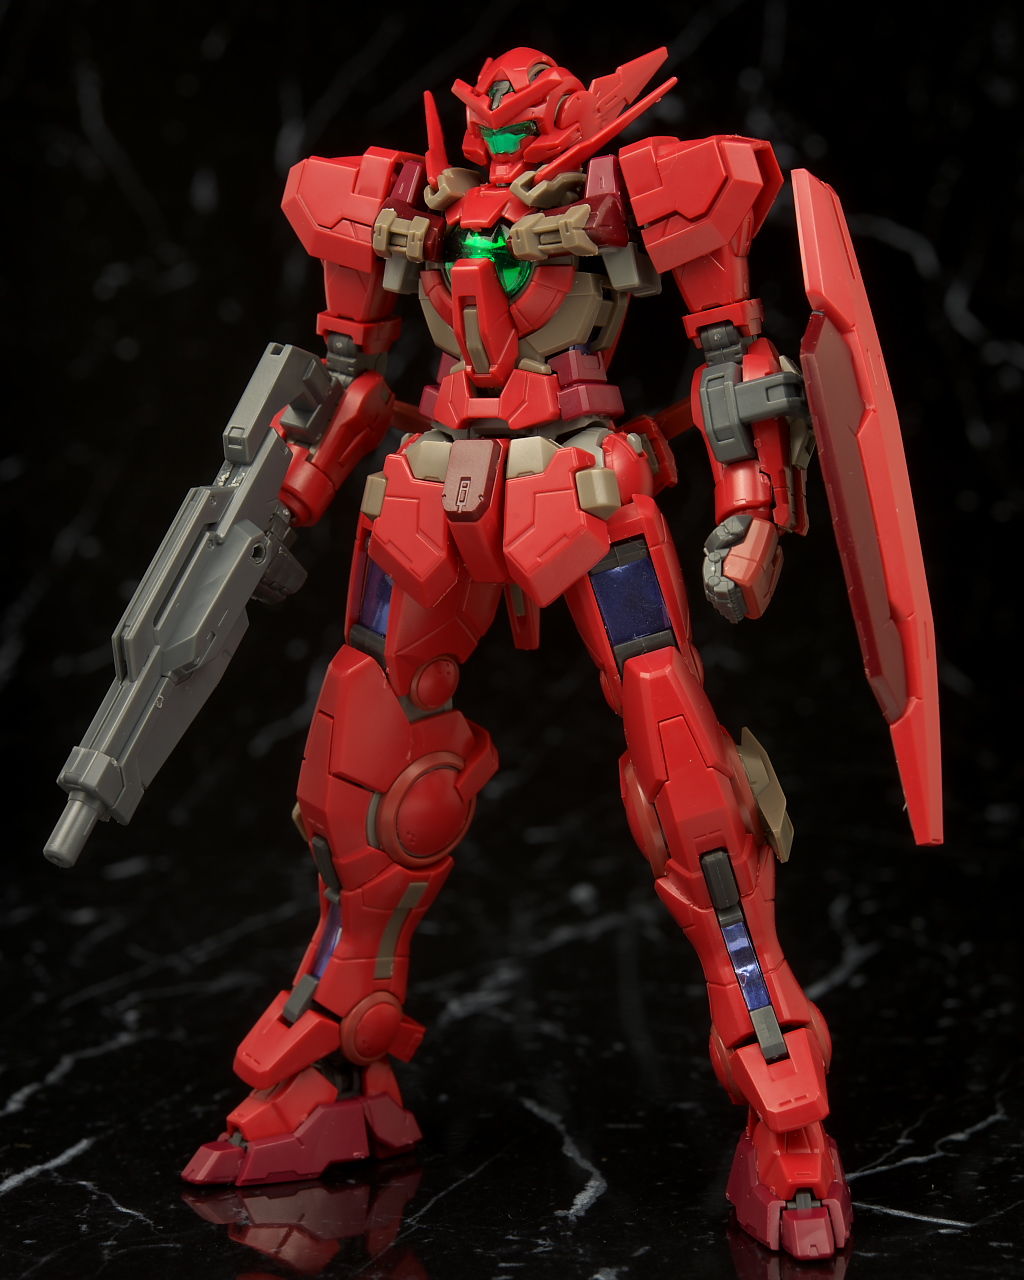 P-Bandai RG 1/144 Gundam Astraea Type-F: ASSEMBLED. Full detailed 